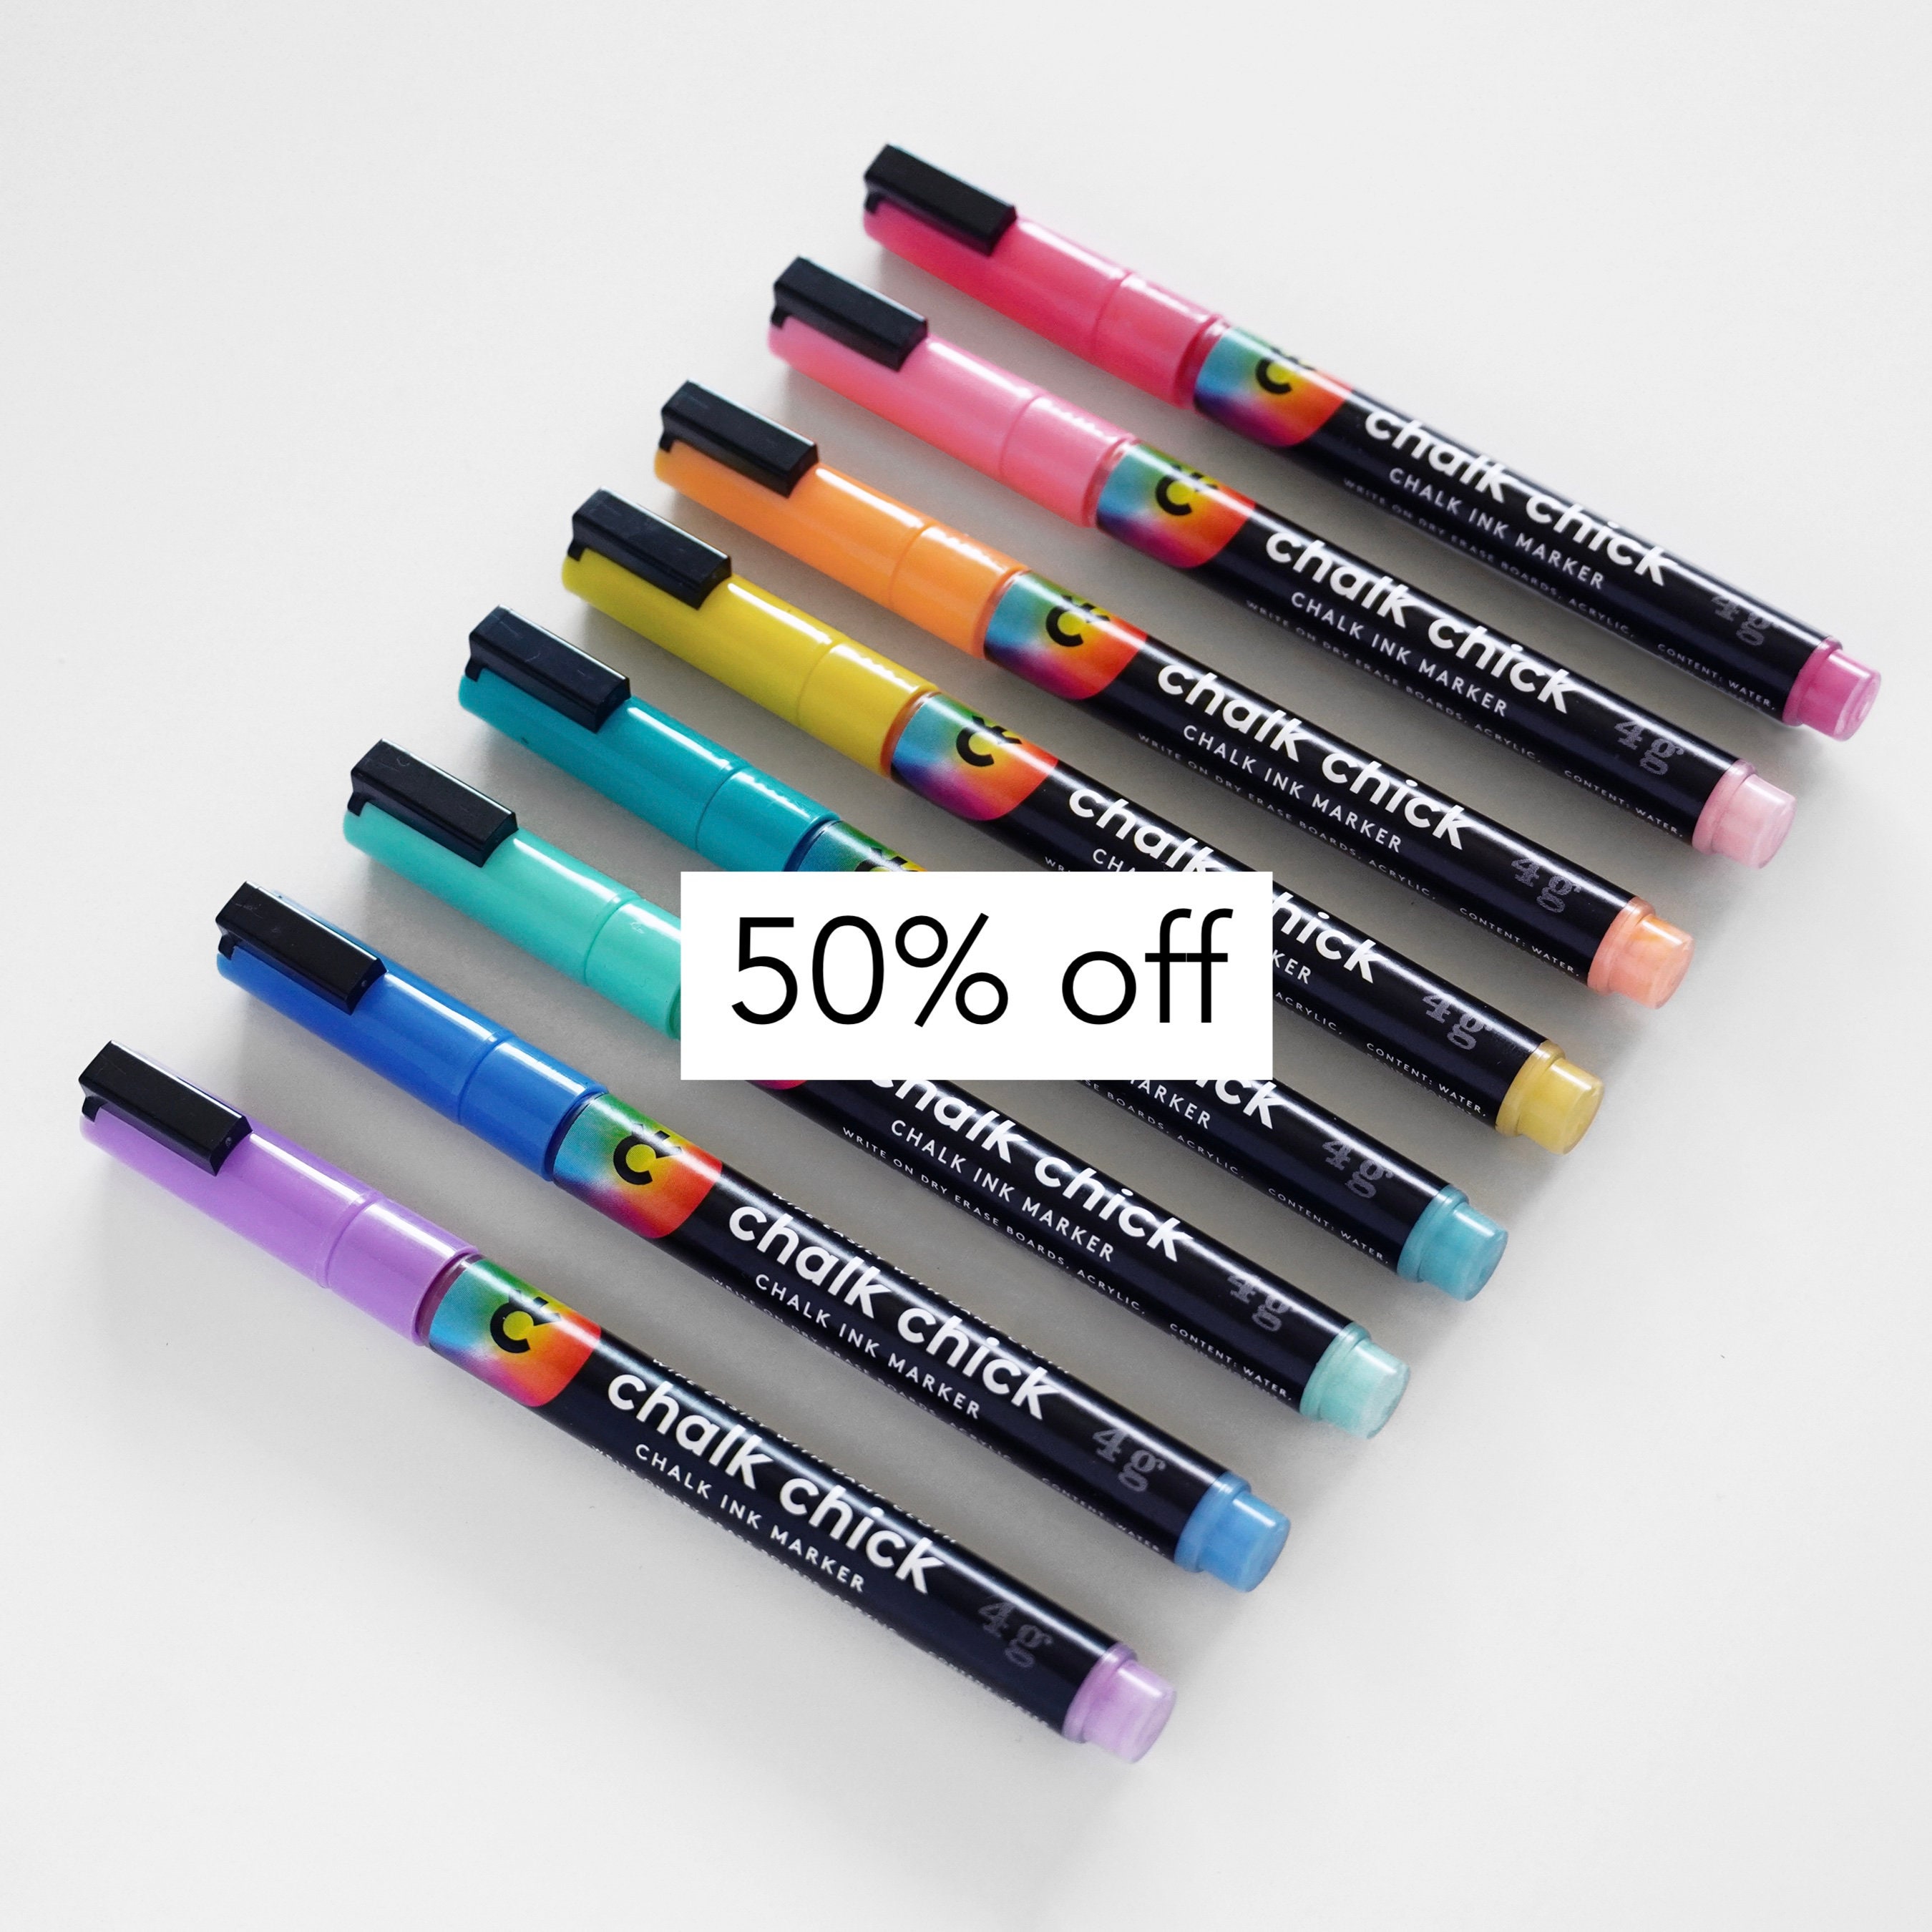 Chalk Marker Sets 4-pk Assorted, Bistro & Fluorescent Chalkboard Pens /  Liquid Chalk / Fine Tip / Bullet Tip / Glass, Windows, Mirrors 